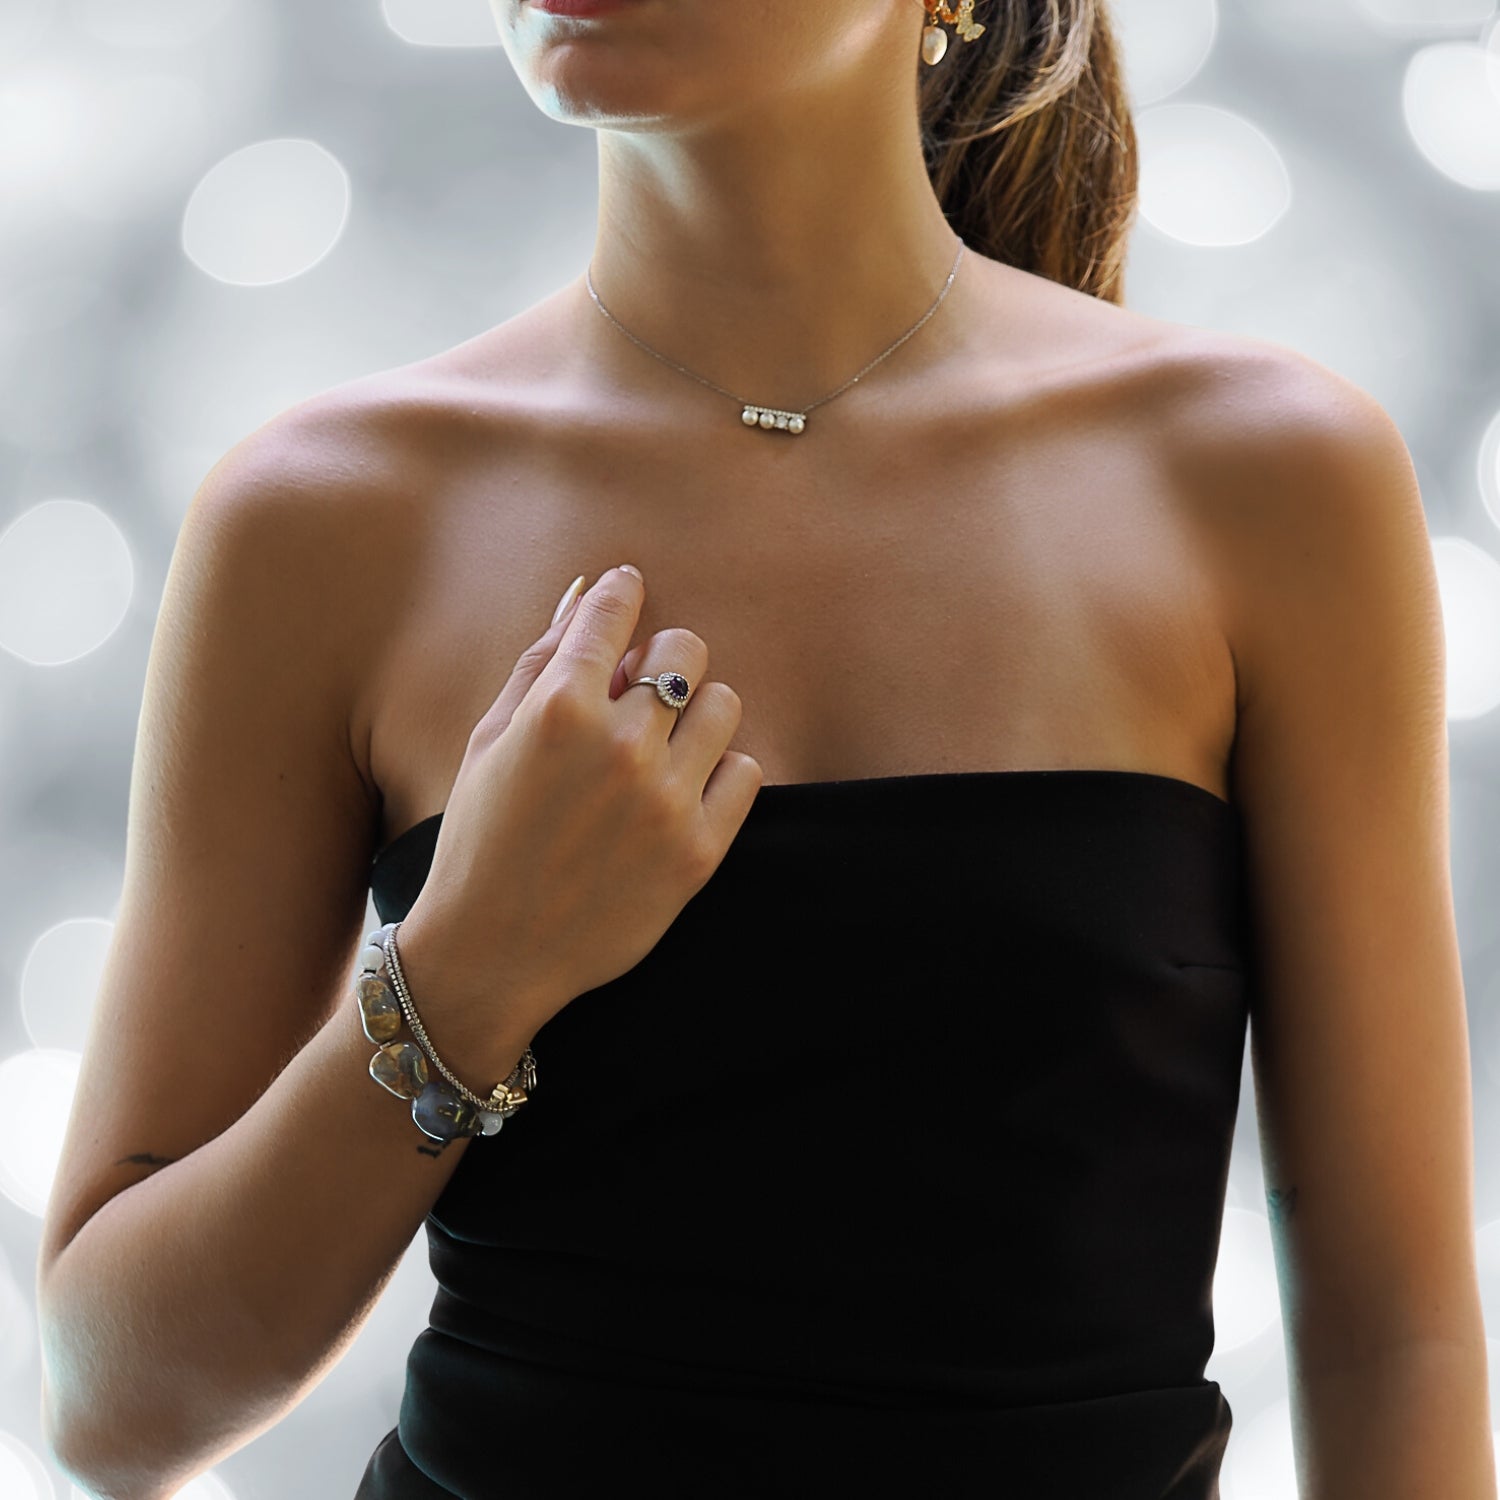 Model Wearing Amethyst & Cz Diamond Ring - Tranquility on Display